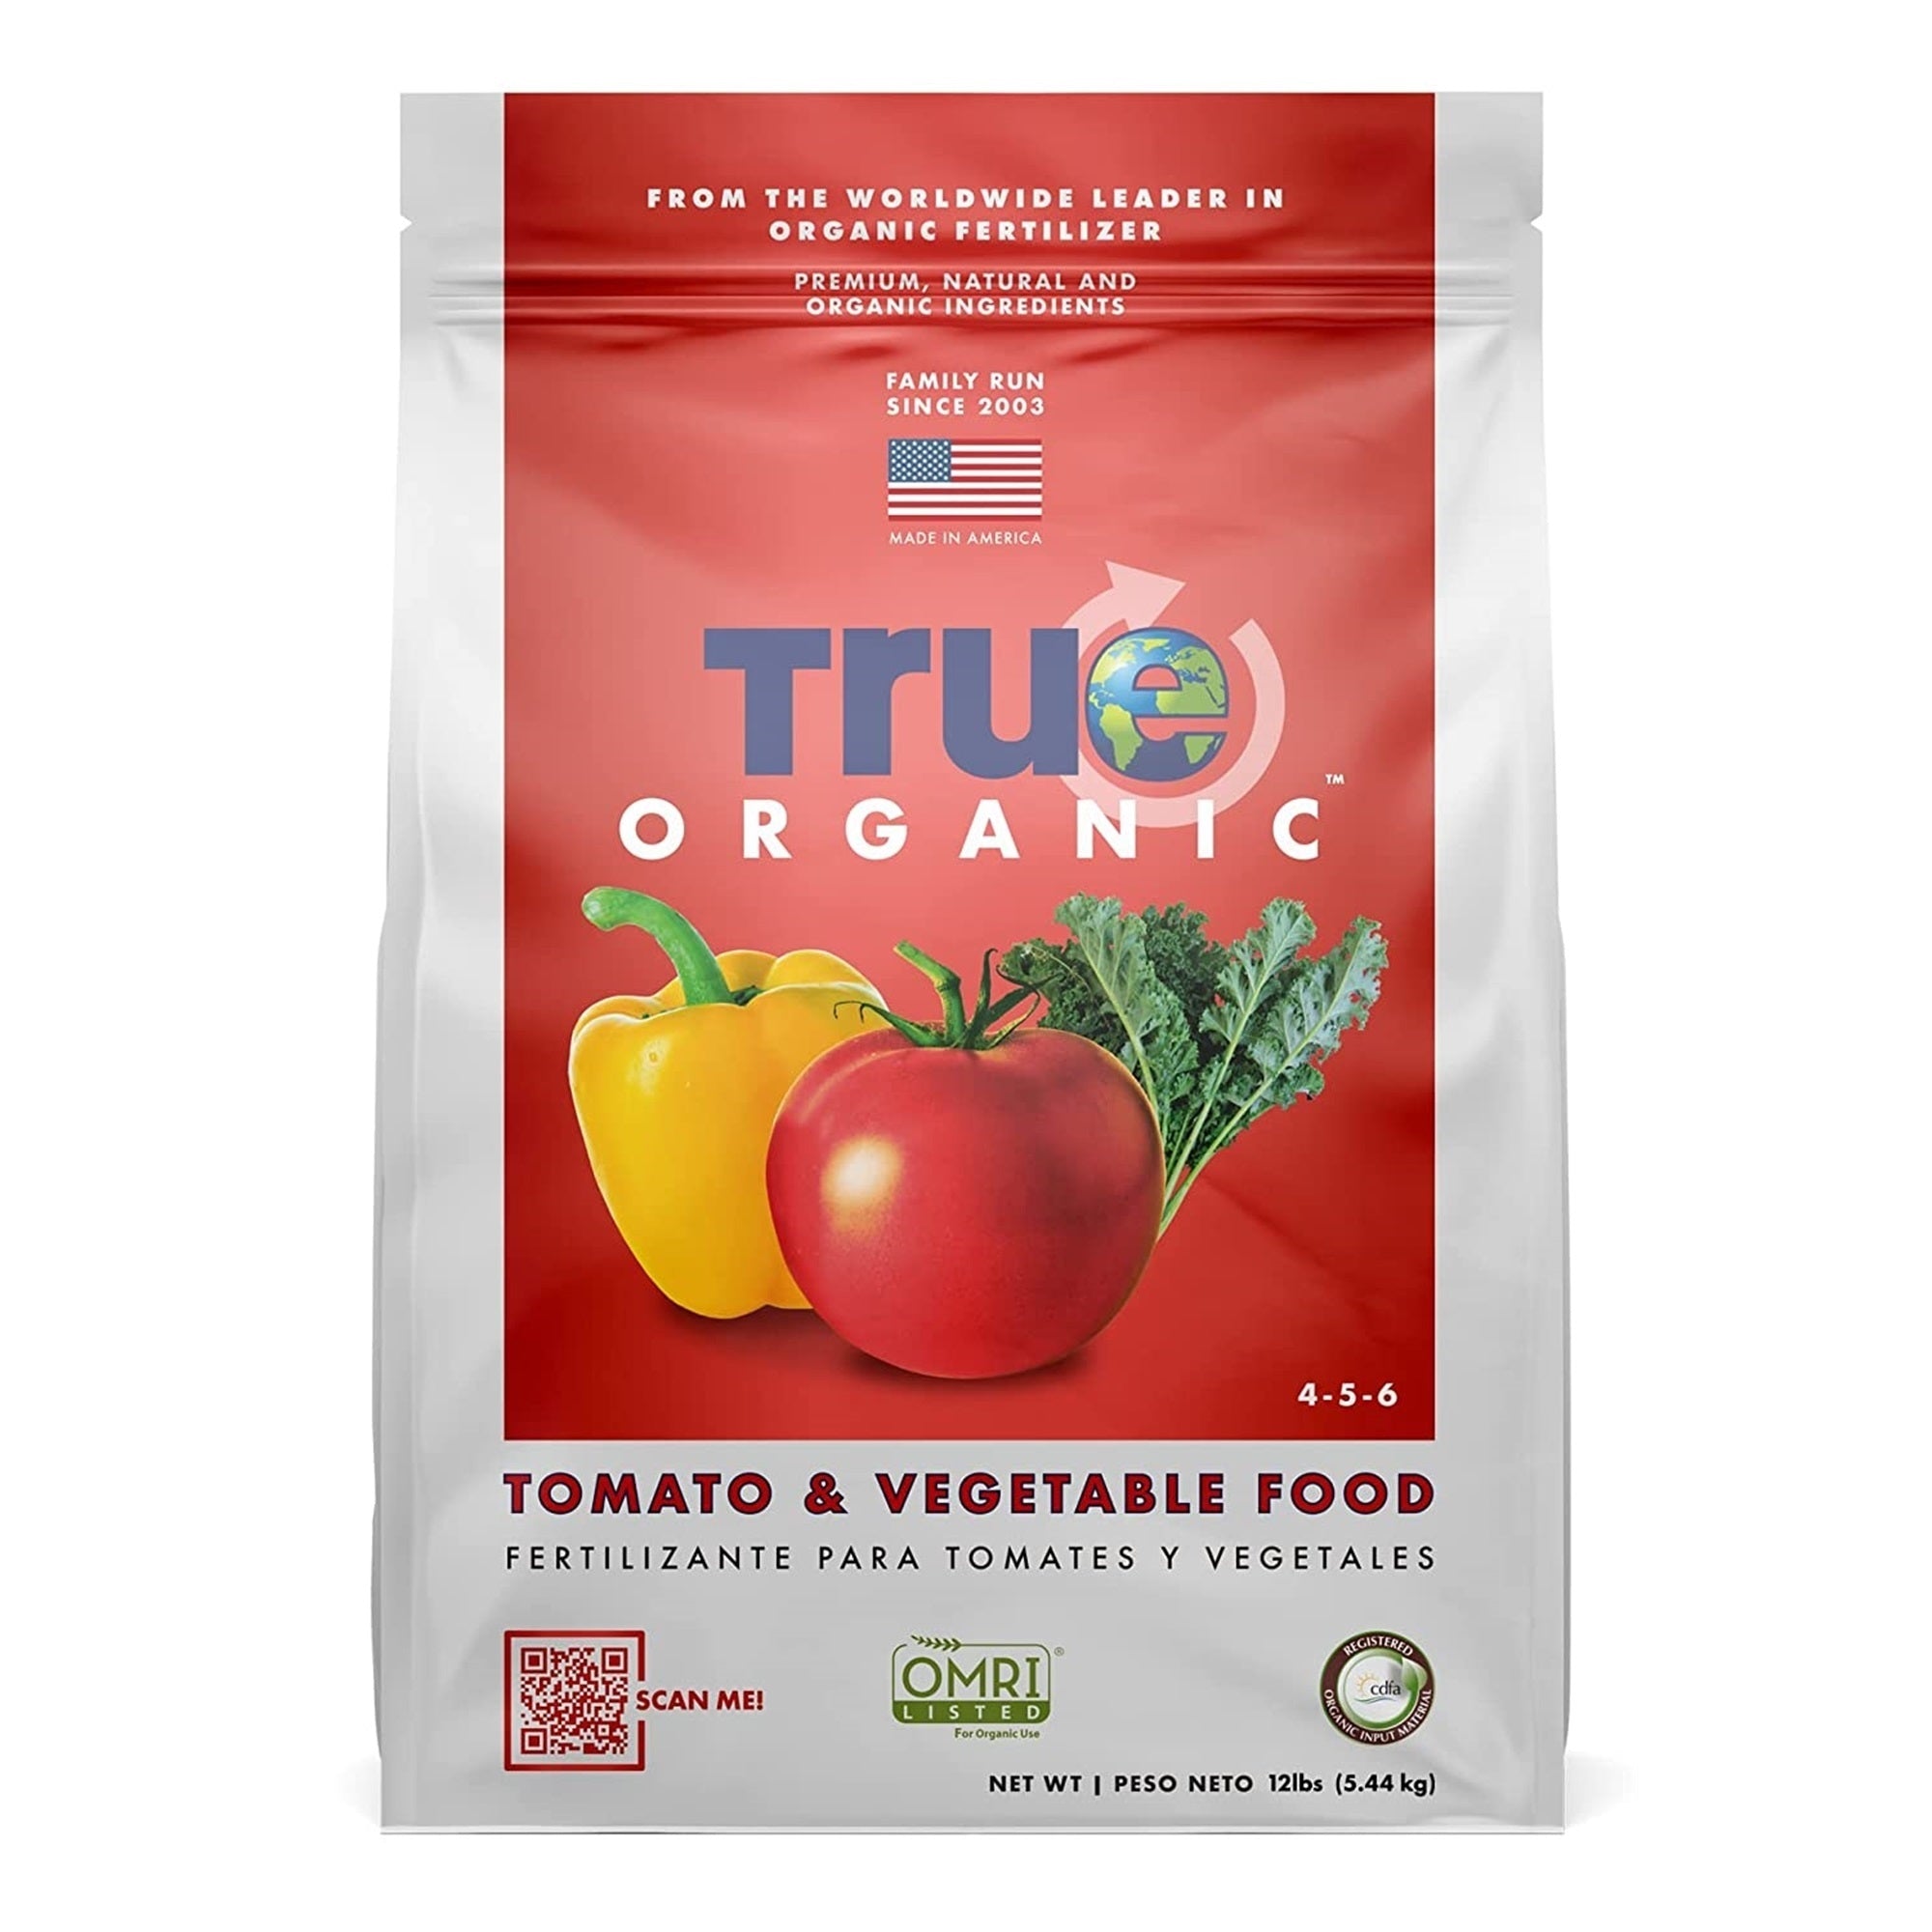 TRUE Organic Tomato & Vegetable Plant Food for Organic Gardening